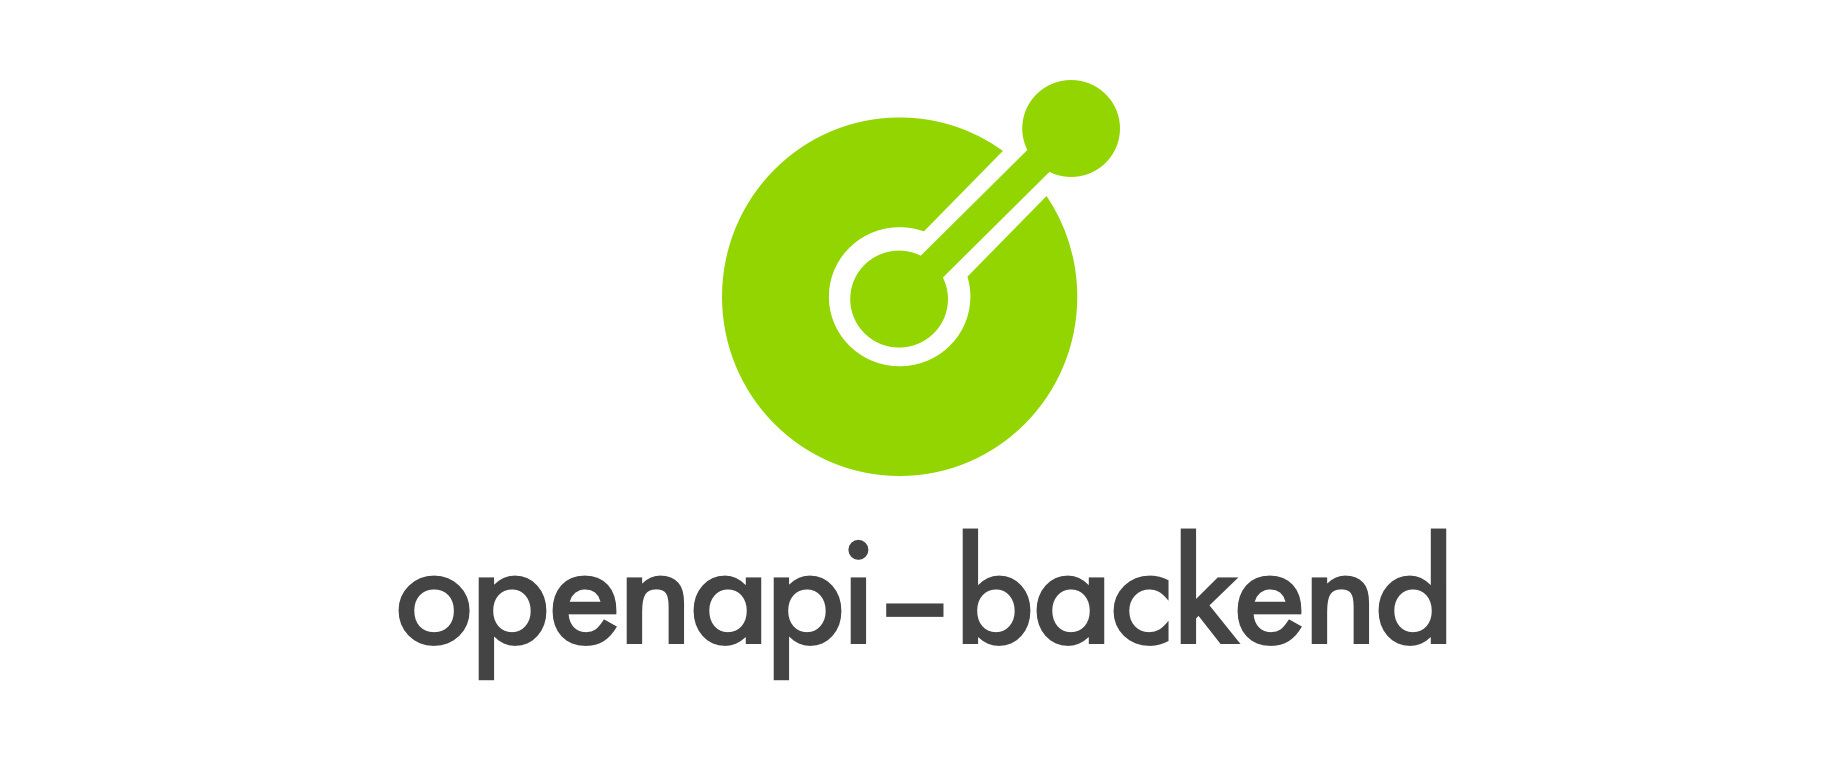 openapi-backend